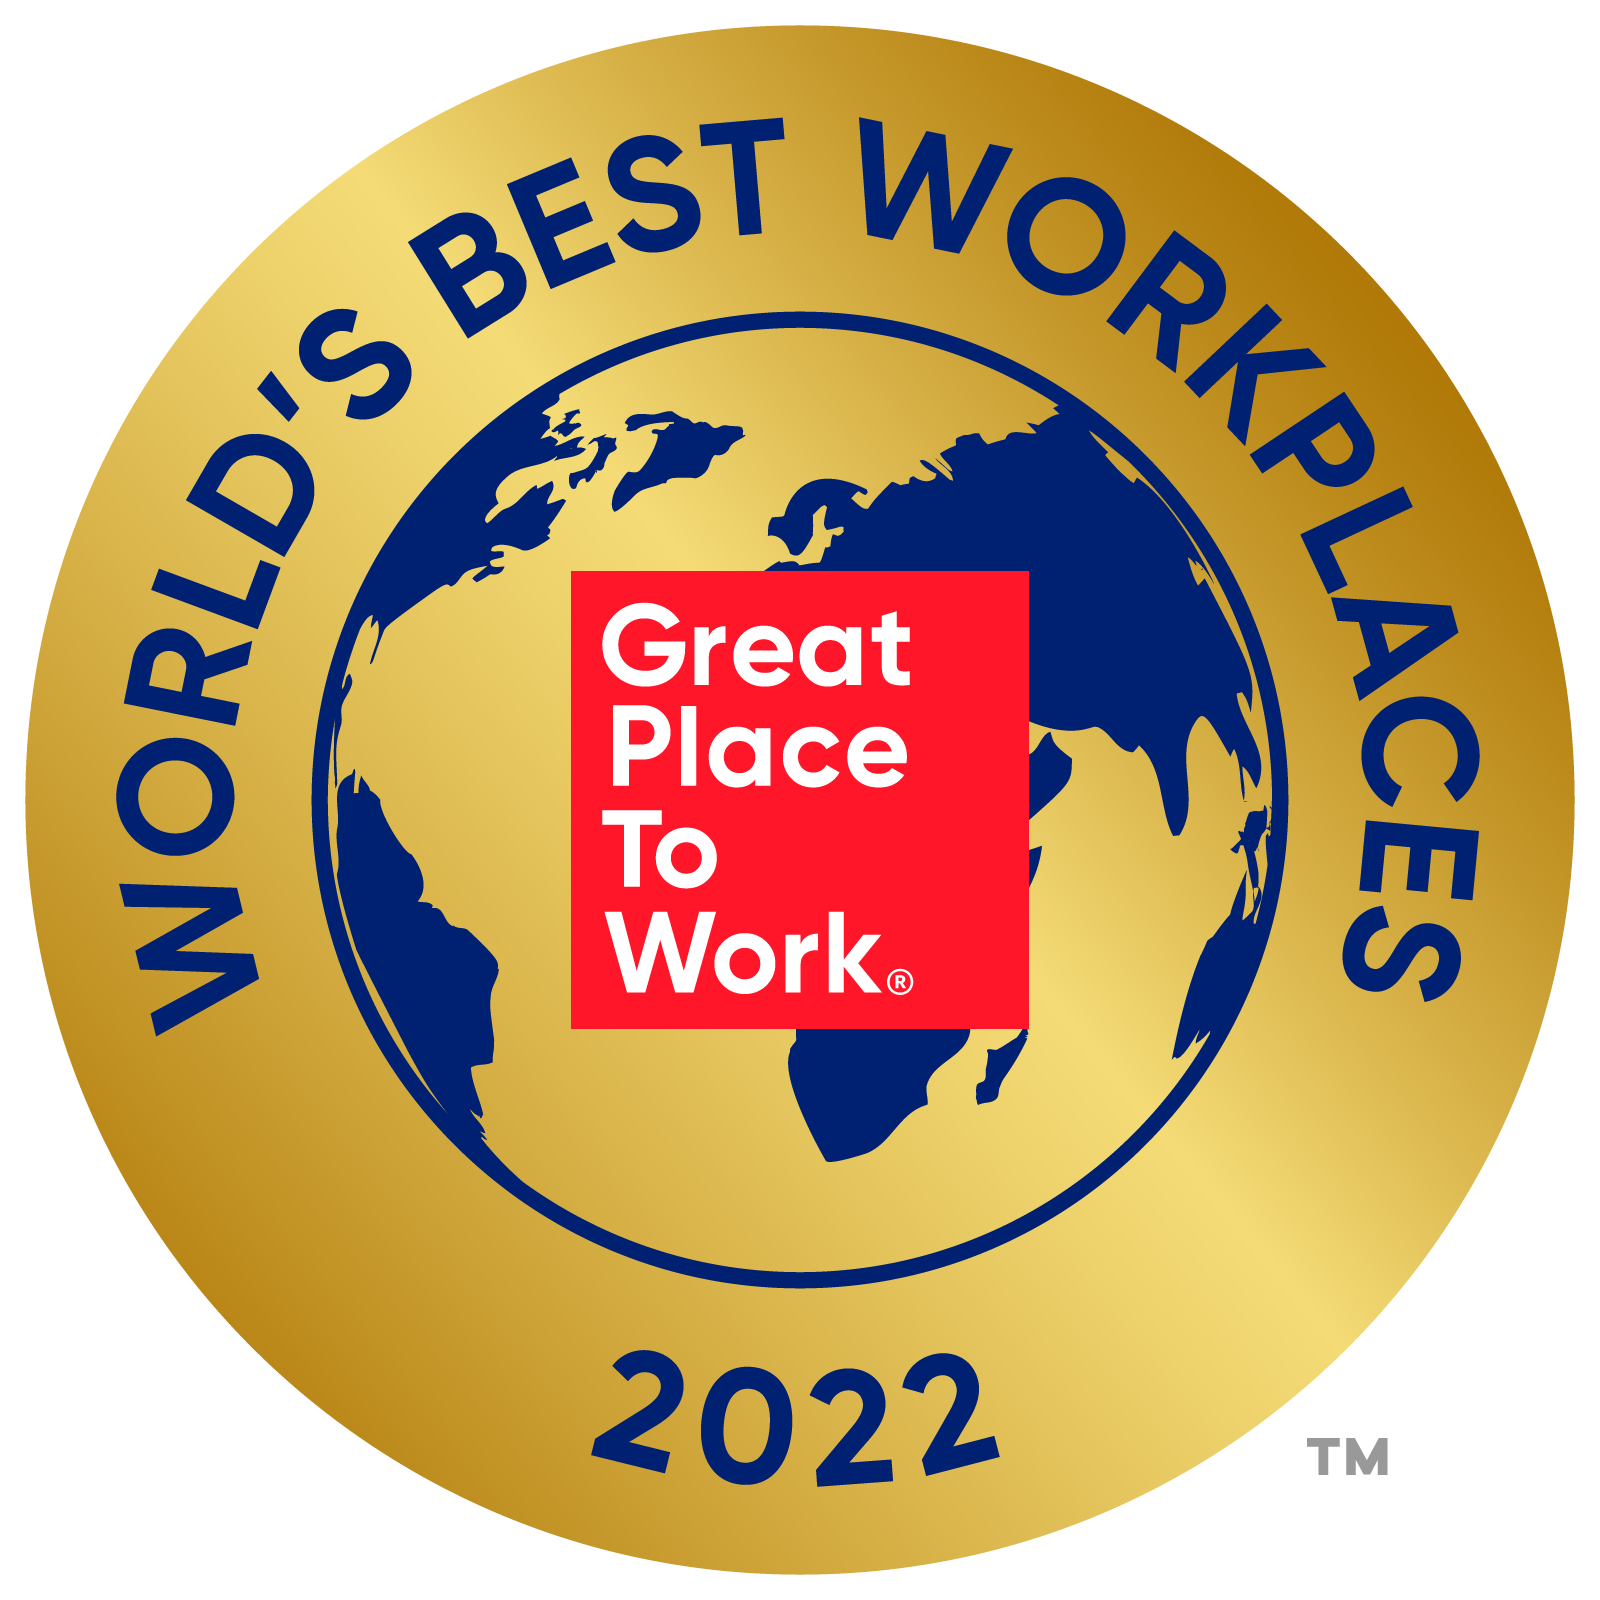 Worlds best workplaces